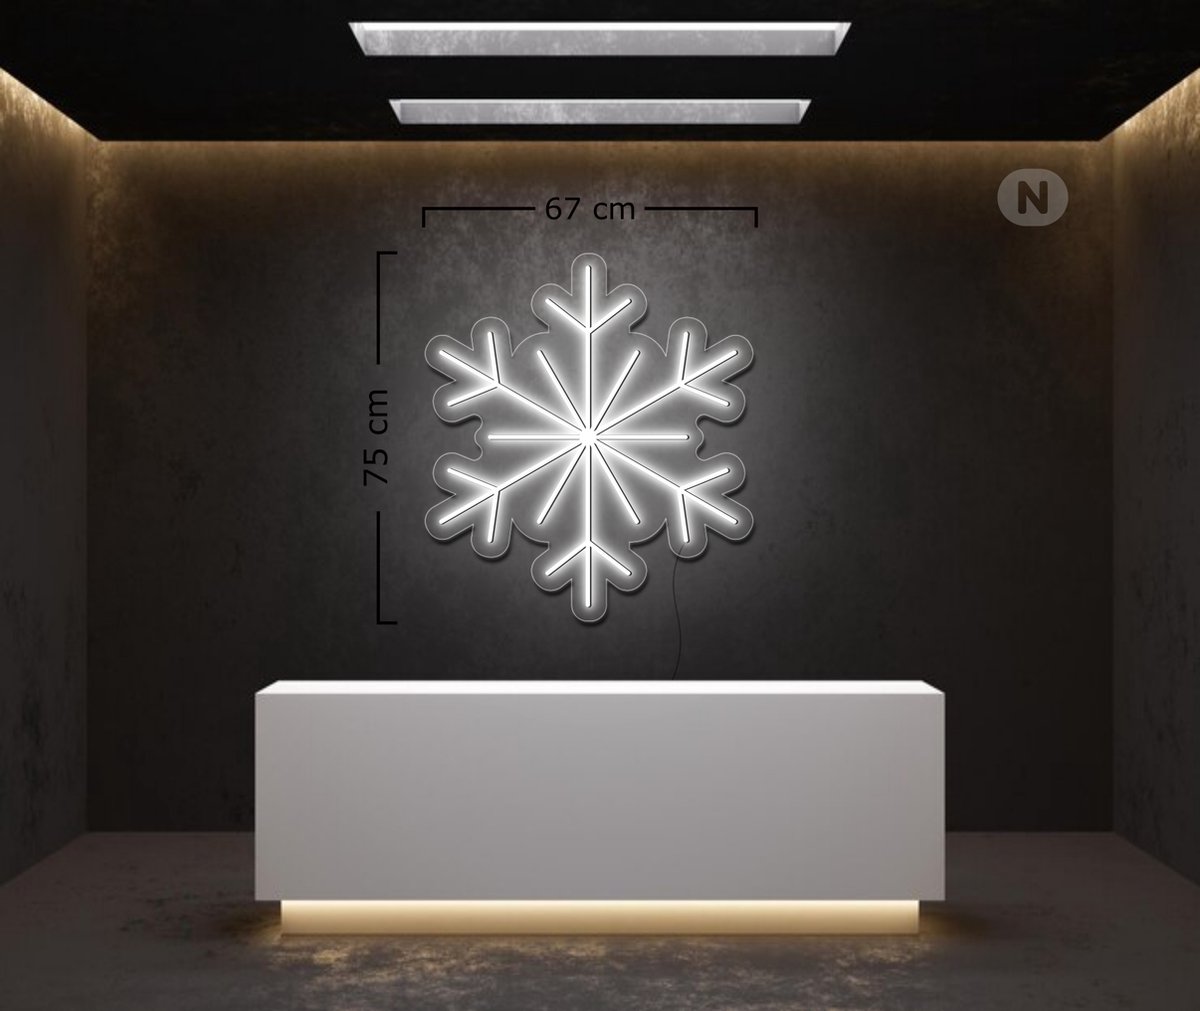 Led Neonbord - Led Neonverlichting - Sneeuw - Koud wit - 75cm * 67cm